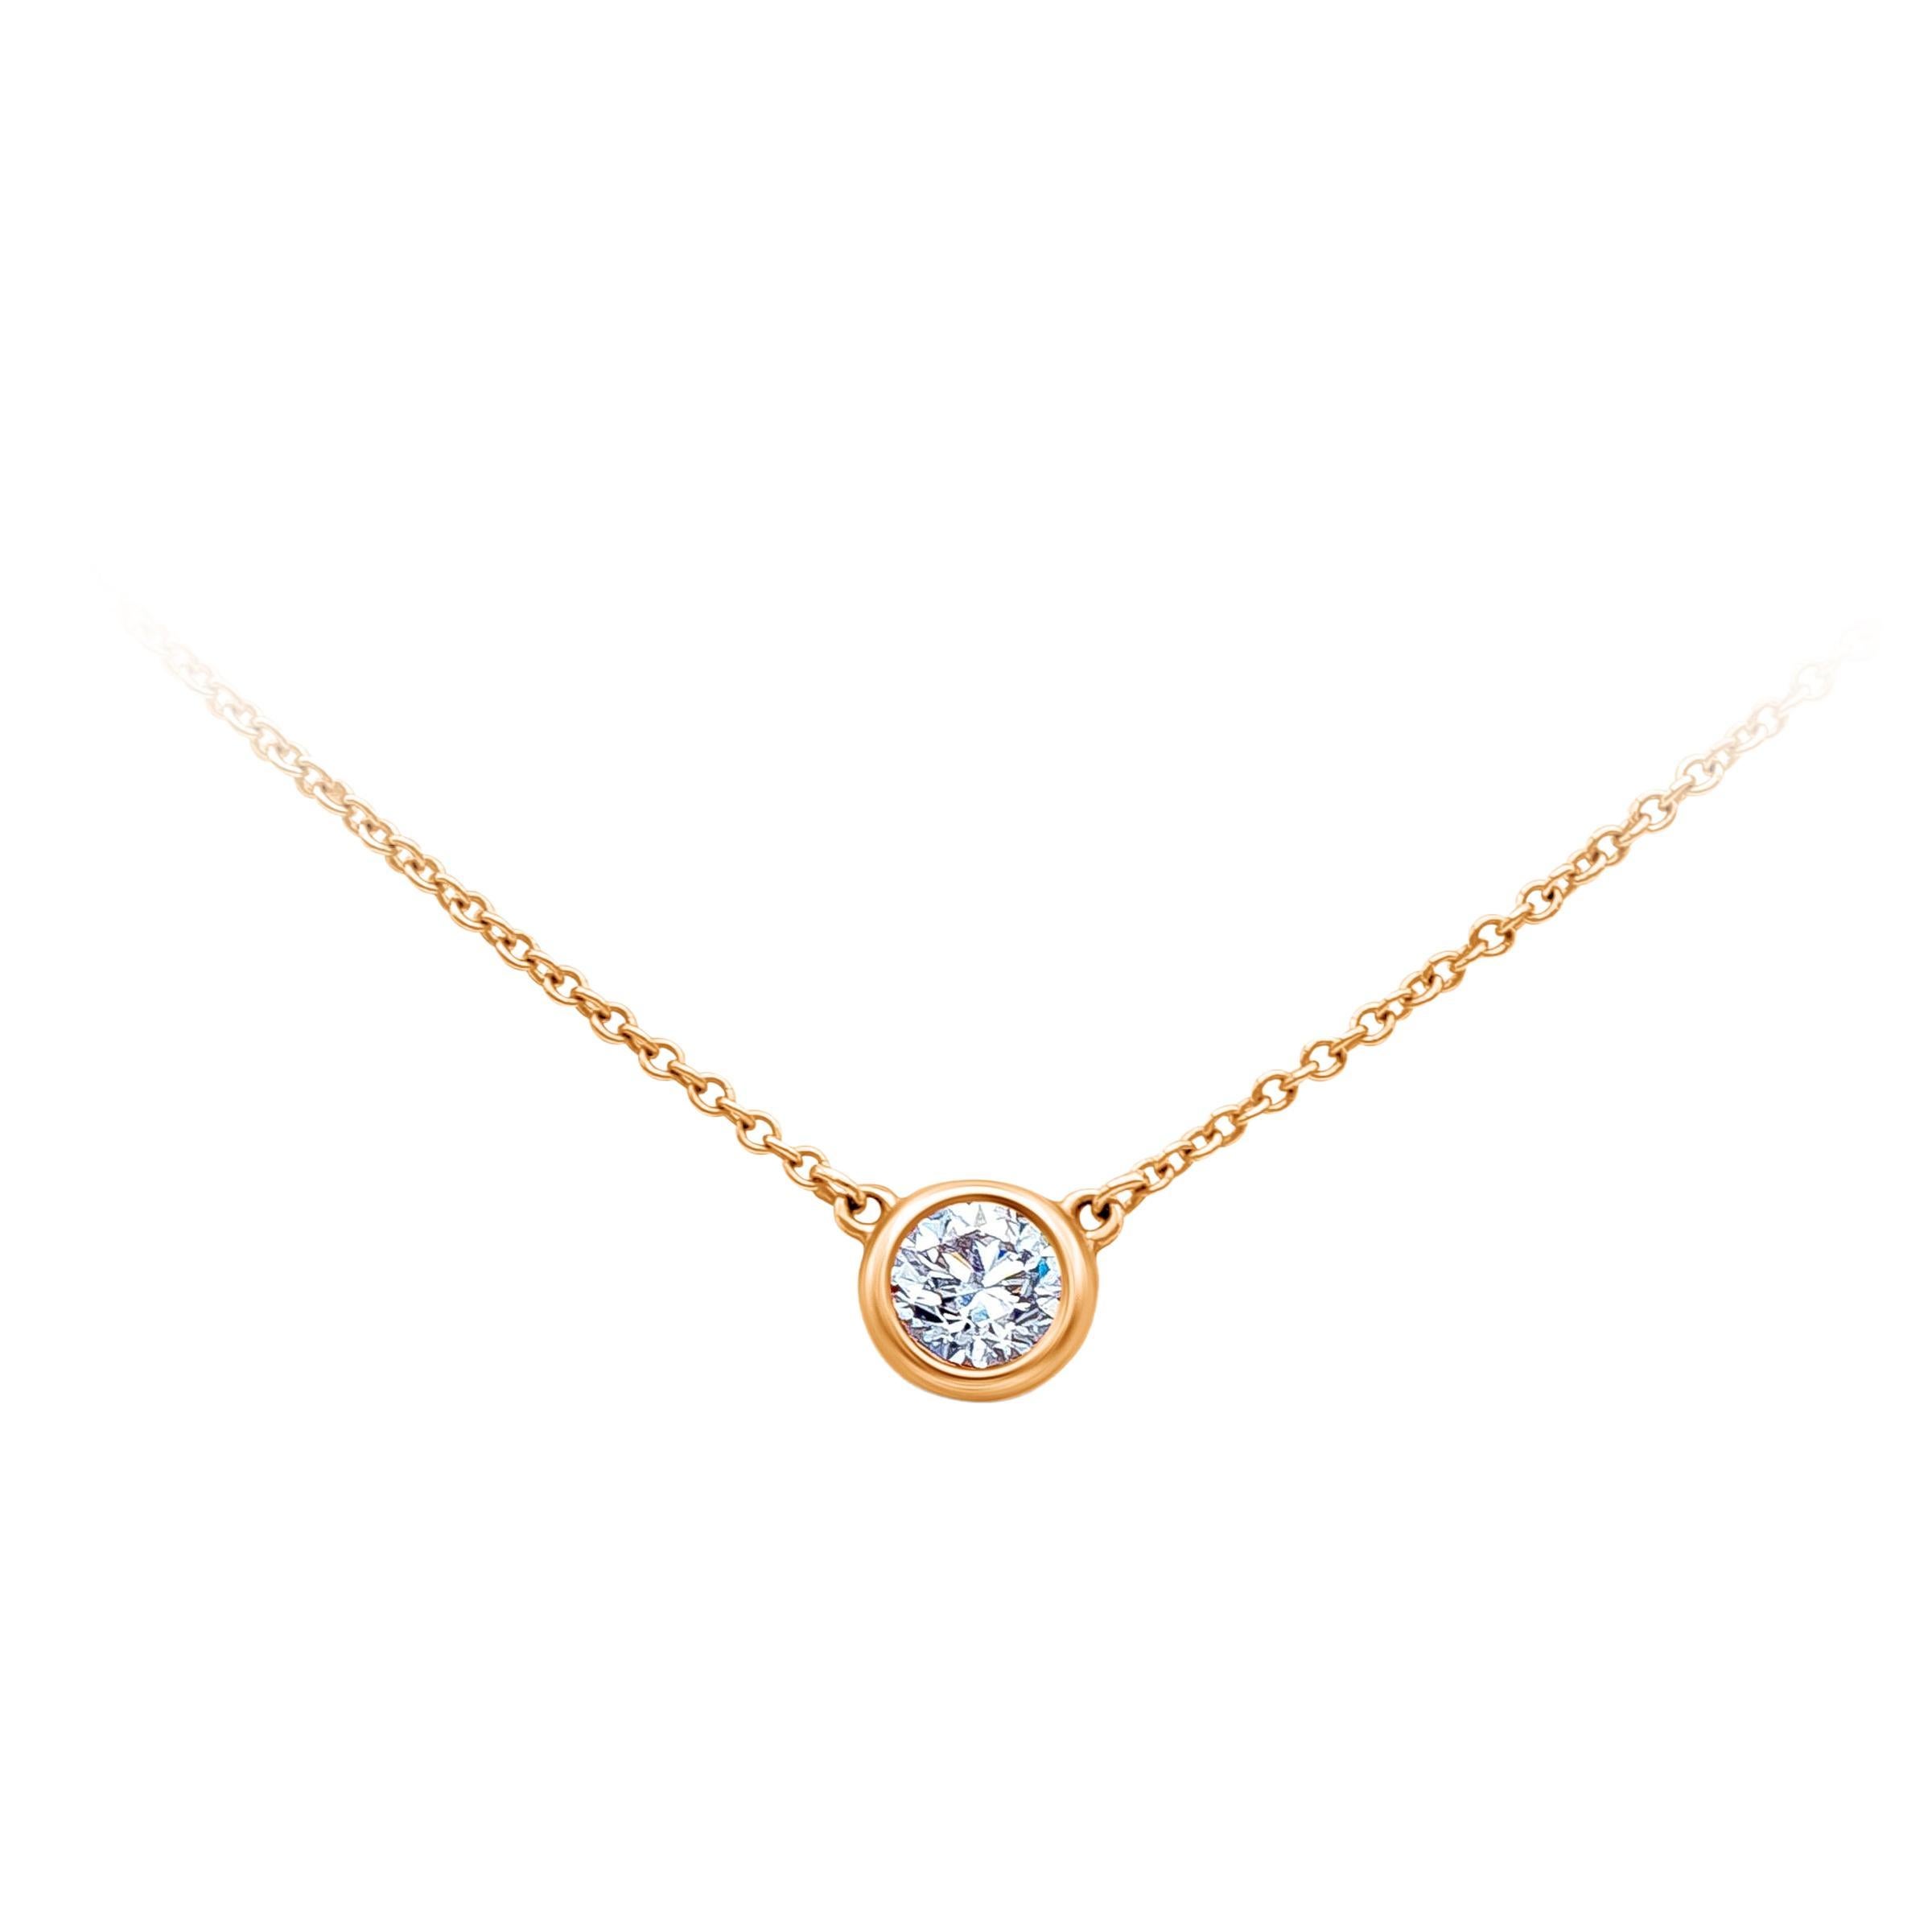 Roman Malakov, collier pendentif solitaire serti d'un diamant rond de 0,47 carat